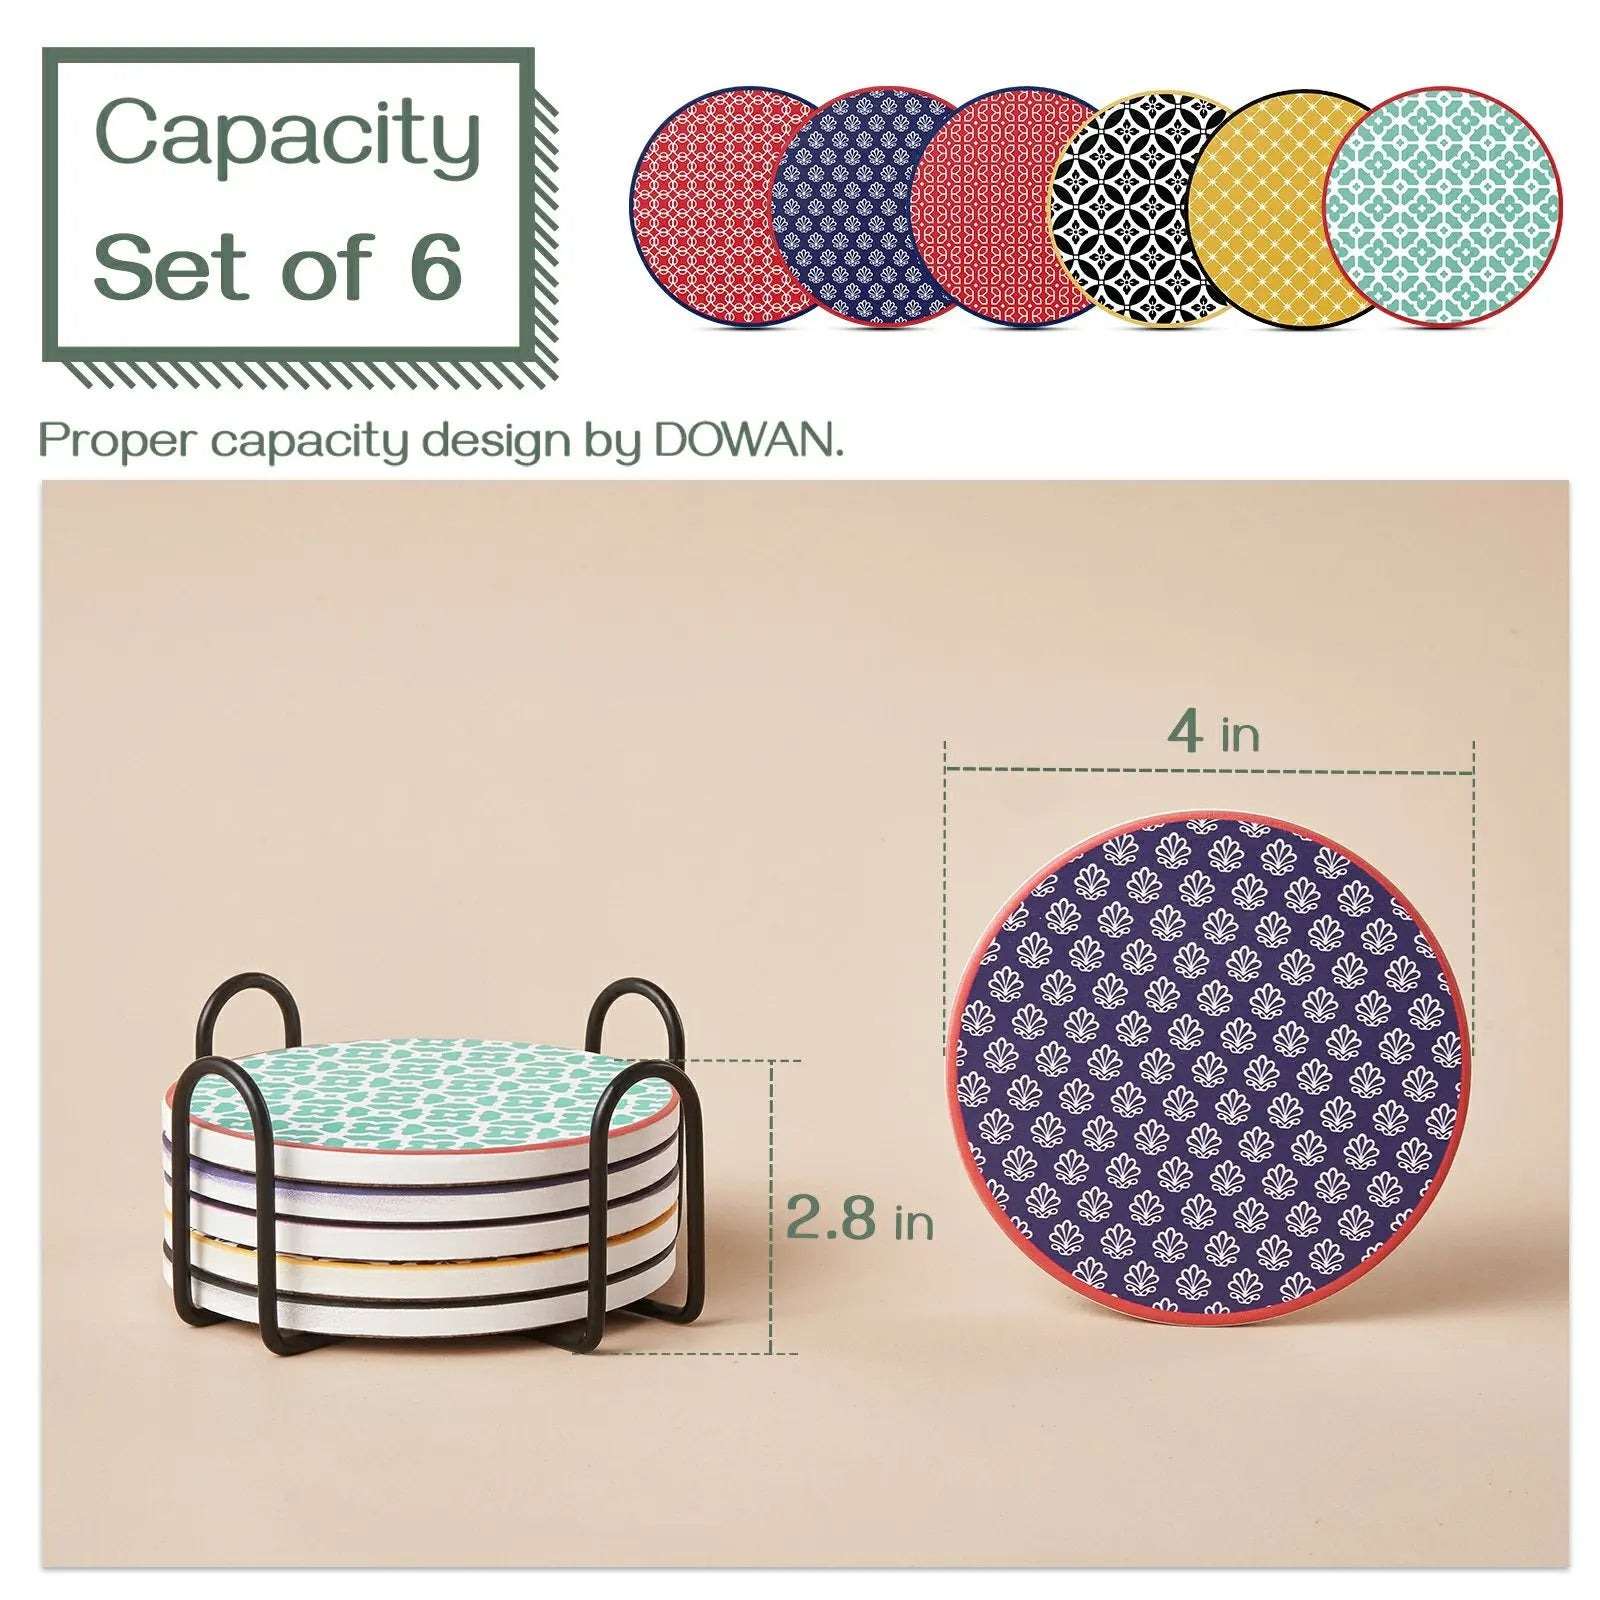 Vibrant Joy Ceramic Coasters - Set of 6